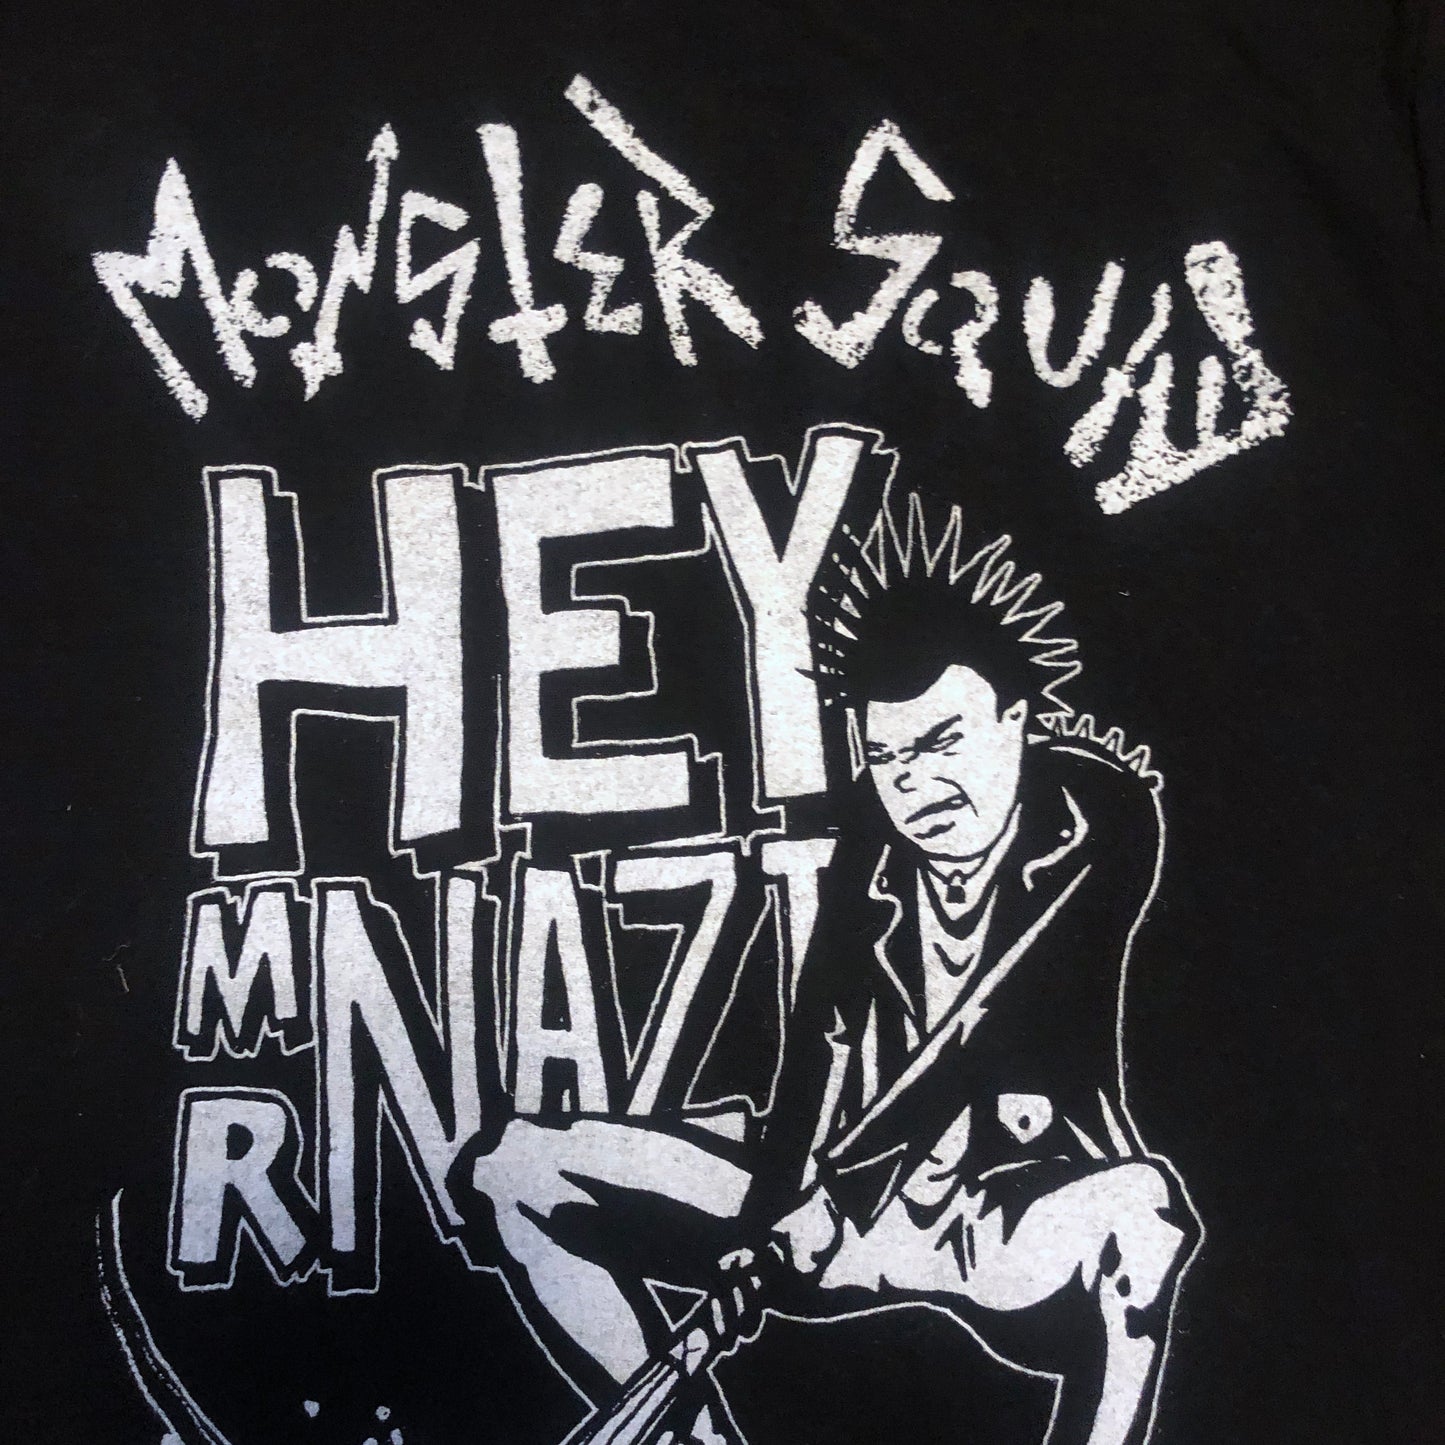 Monster Squad "Hey Mr Nazi!" T-Shirt